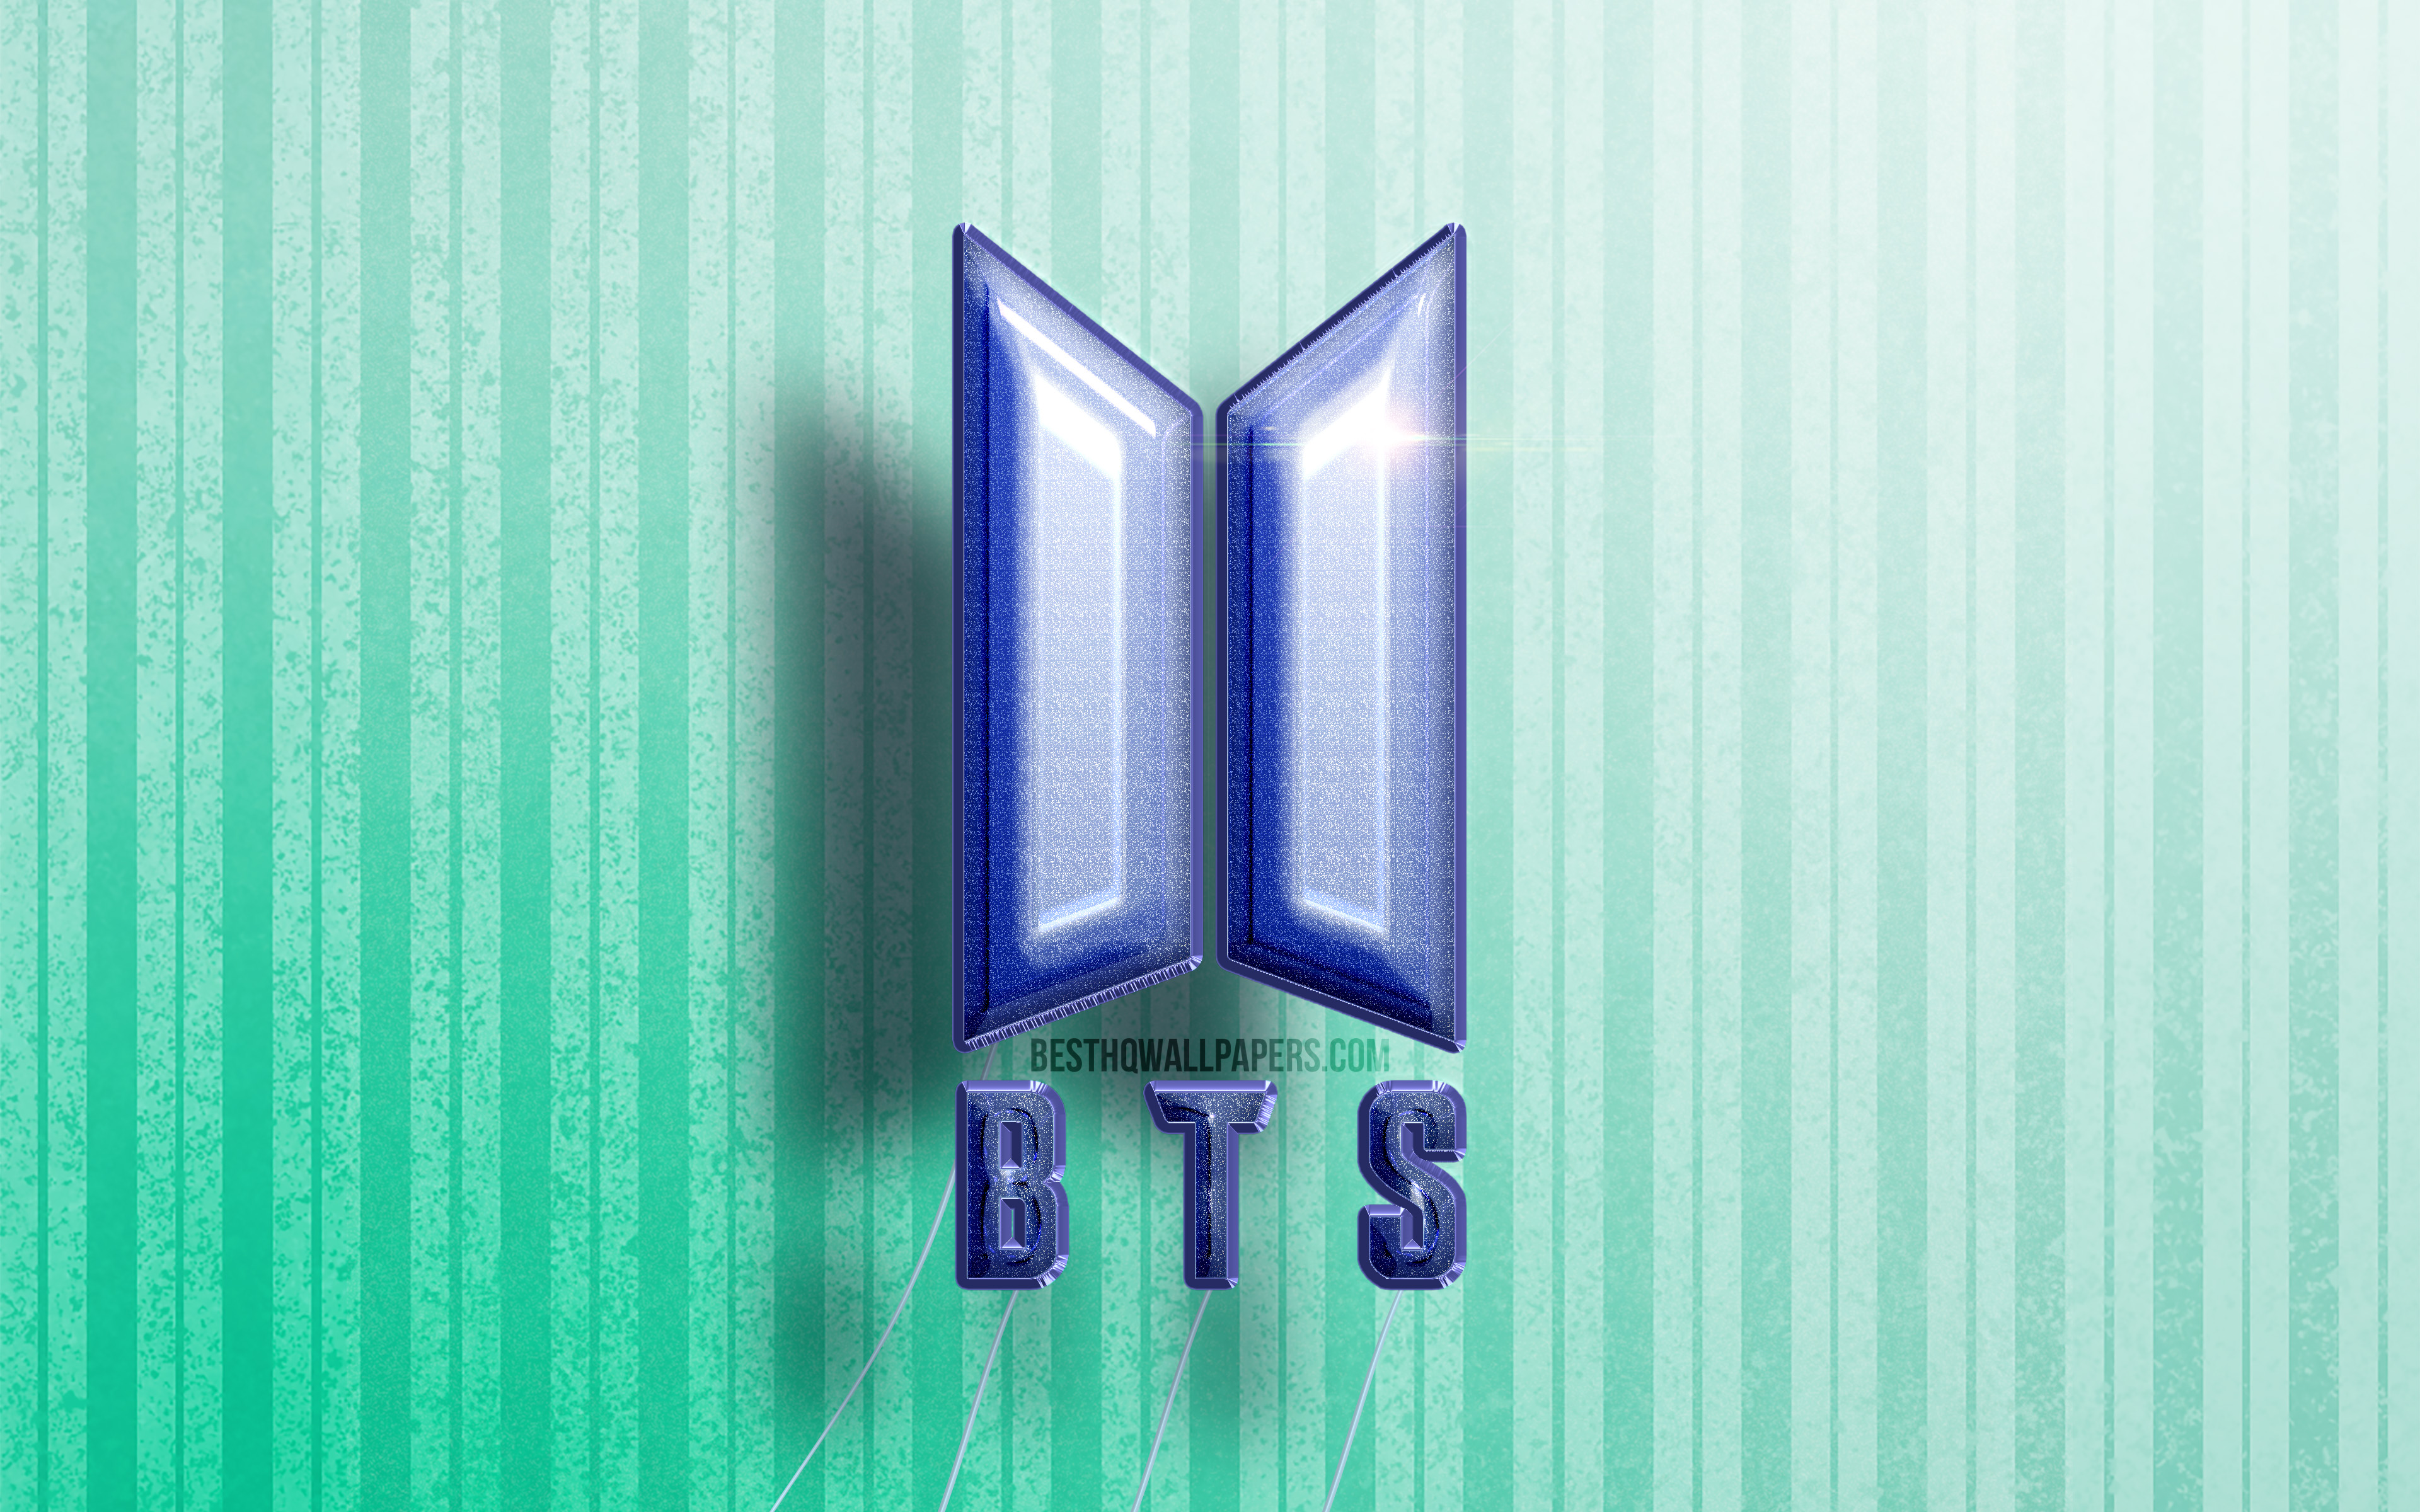 Download wallpaper 4k, BTS 3D logo, Bangtan Boys, blue realistic balloons, music stars, BTS logo, Bangtan Boys logo, blue wooden background, BTS for desktop with resolution 3840x2400. High Quality HD picture wallpaper